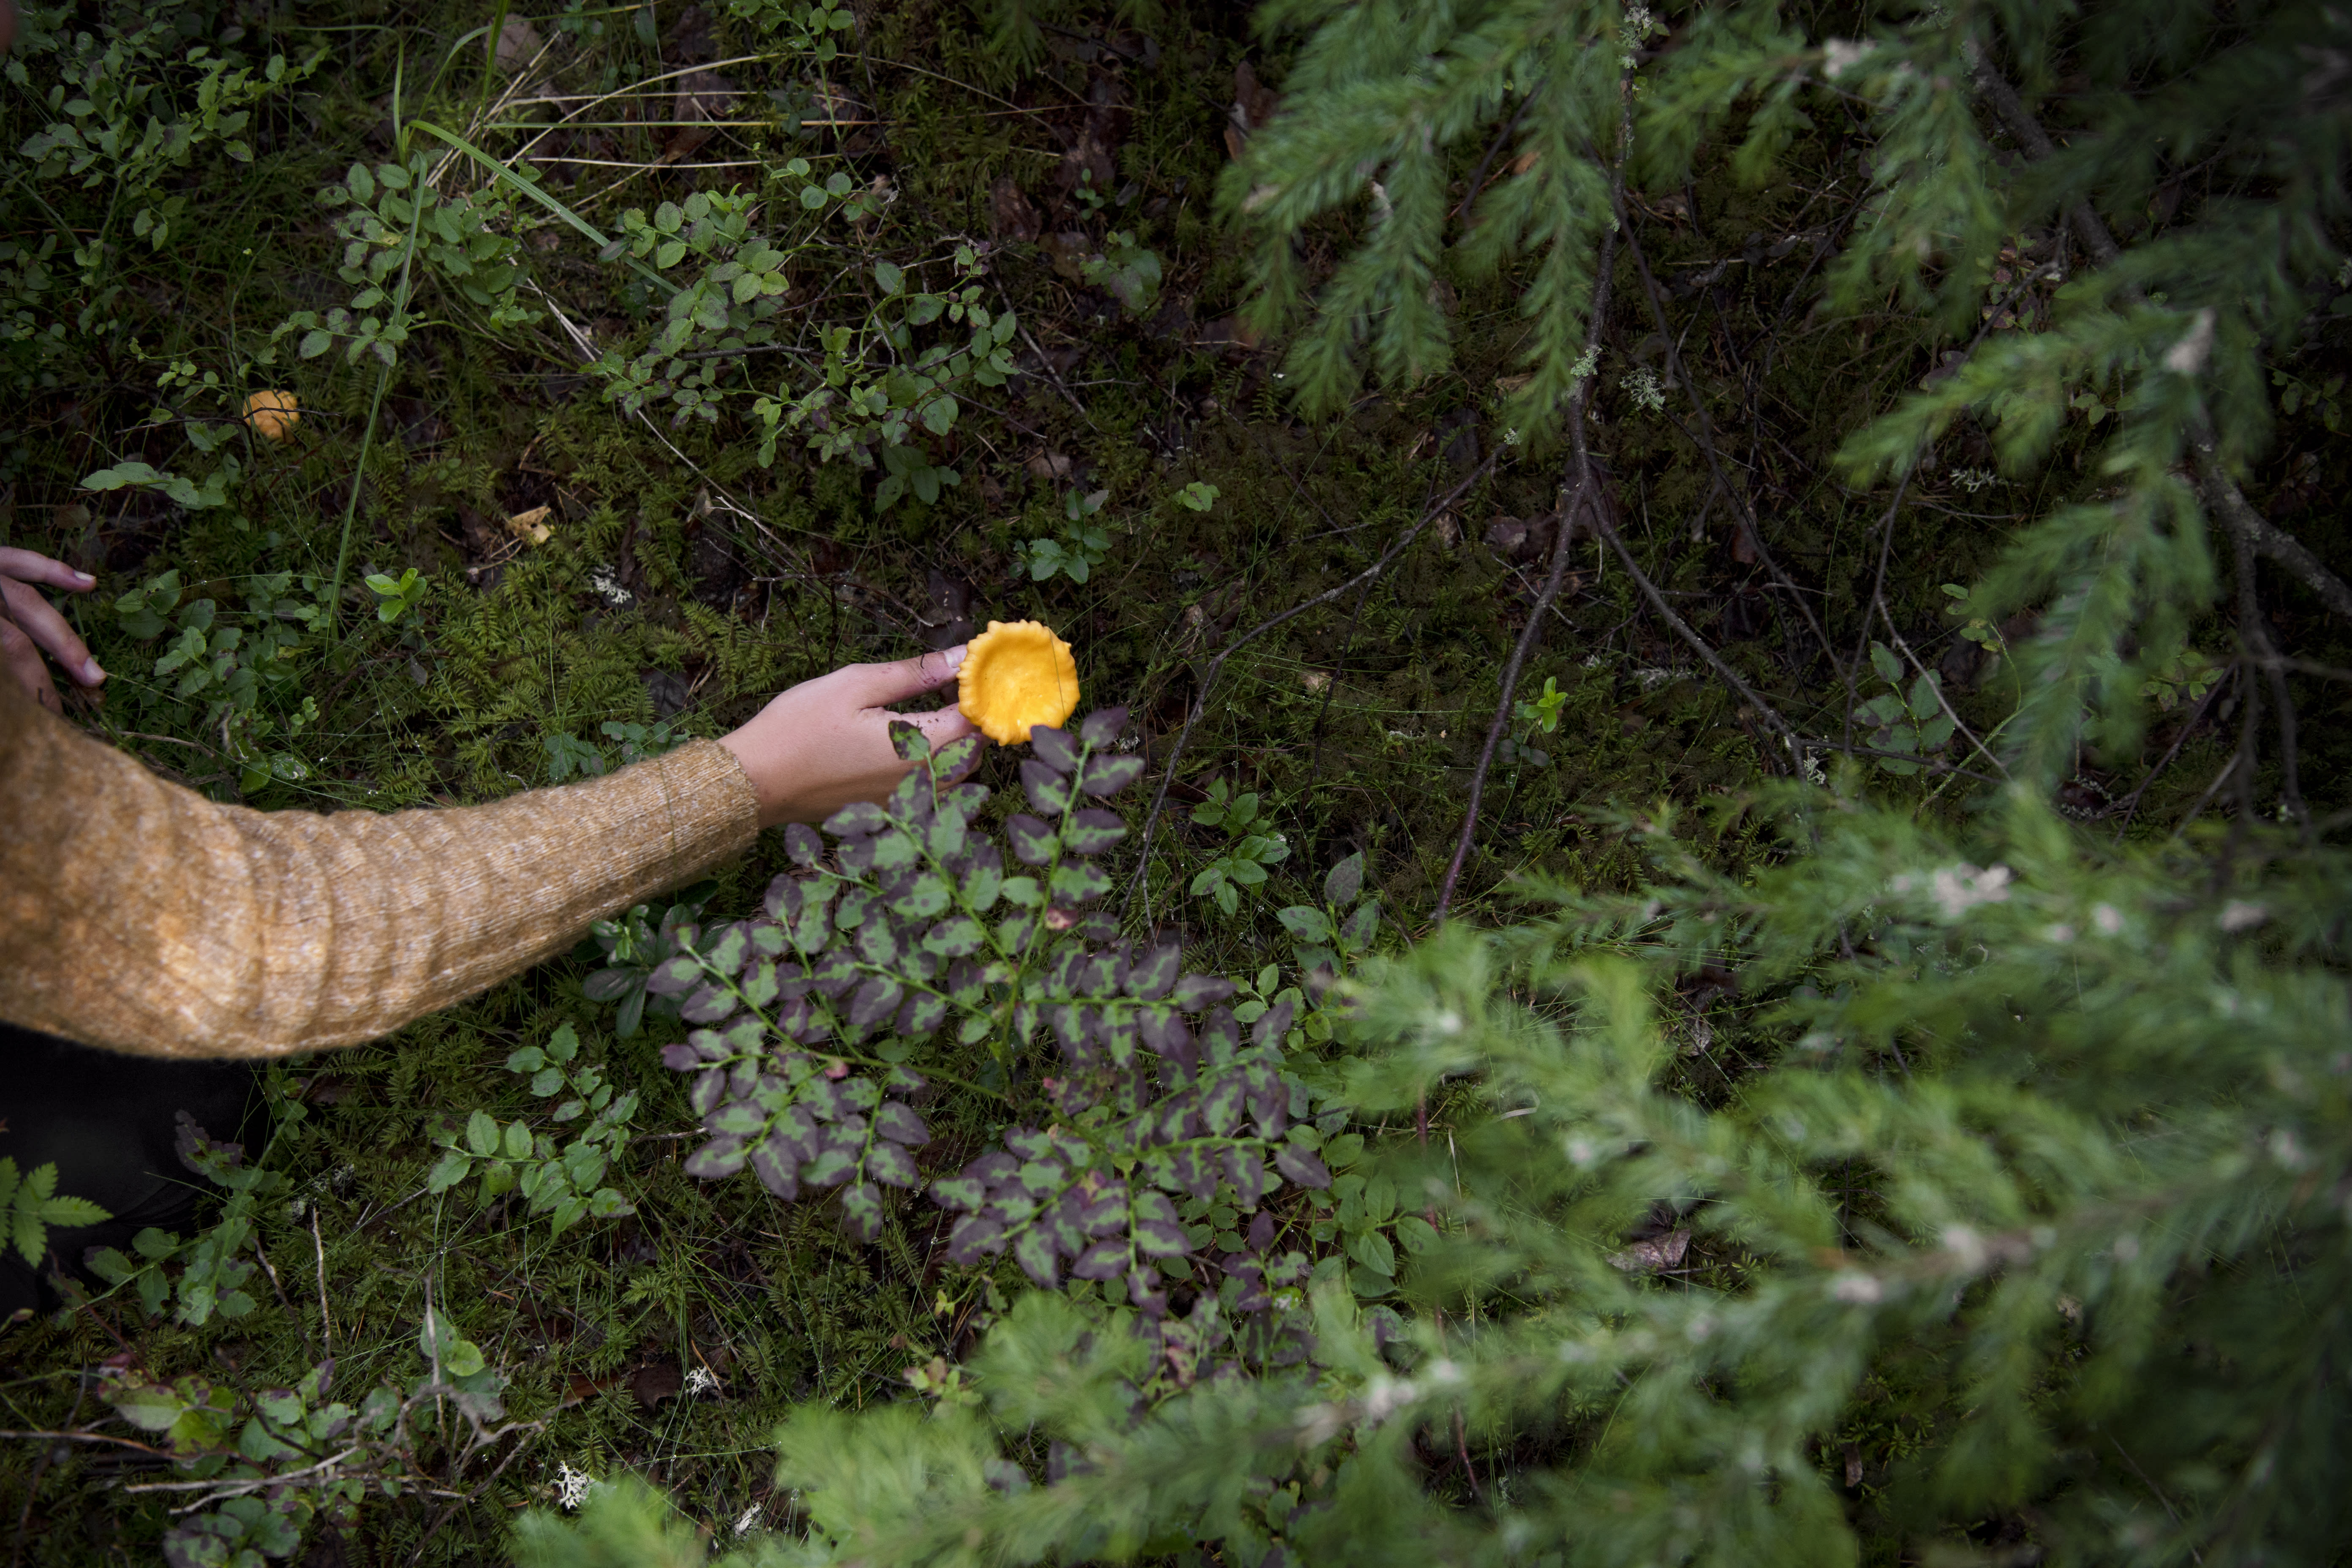 Wild mushroom season kicks off in most of Finland